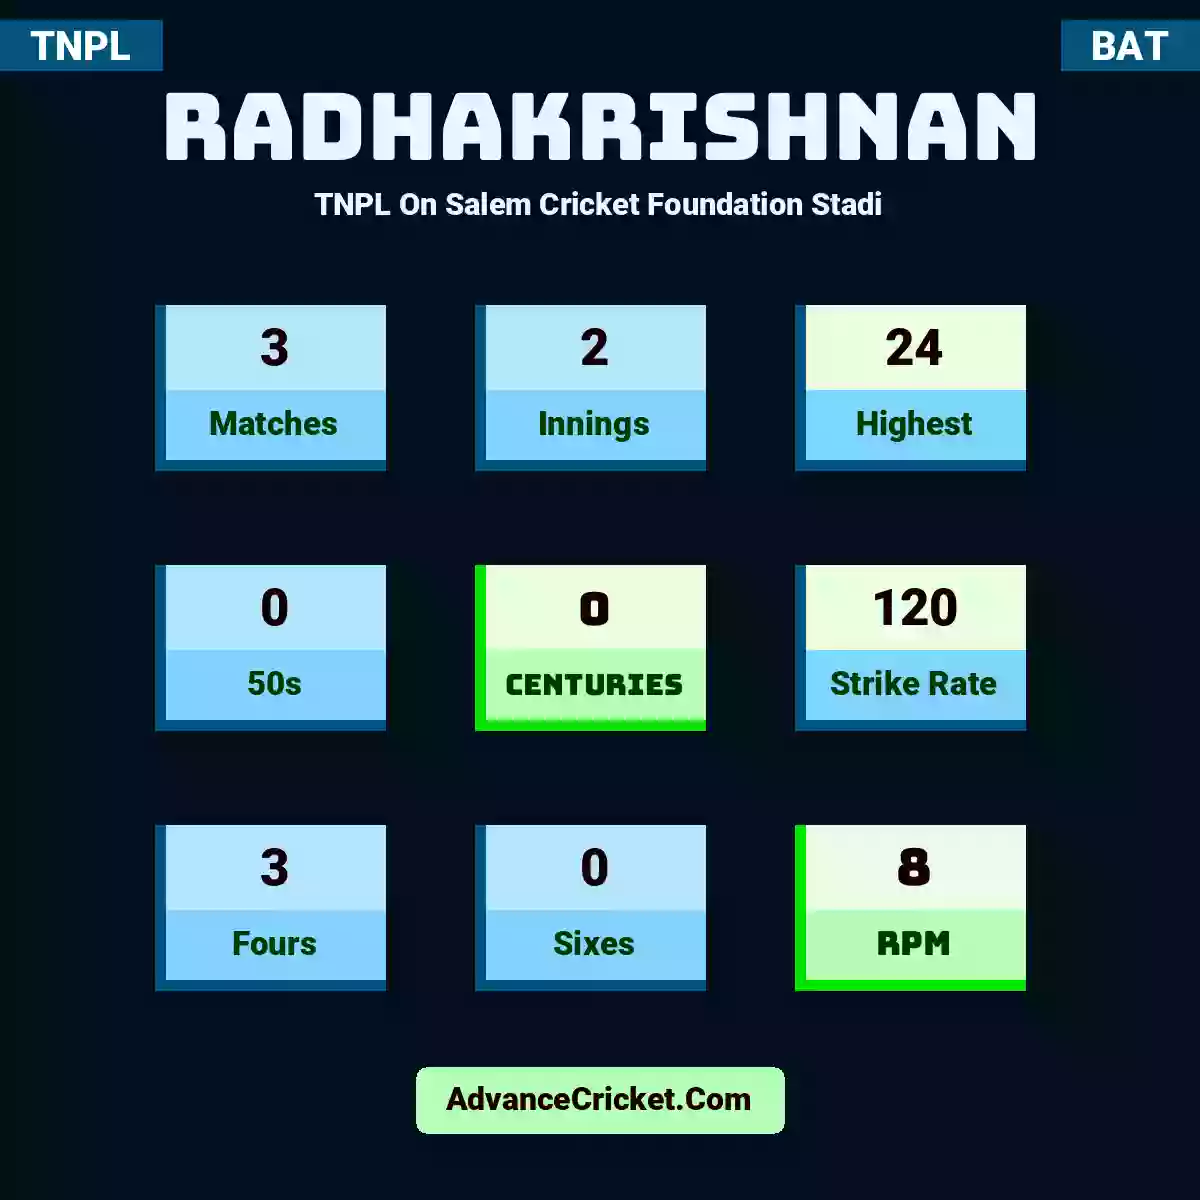 Radhakrishnan TNPL  On Salem Cricket Foundation Stadi, Radhakrishnan played 3 matches, scored 24 runs as highest, 0 half-centuries, and 0 centuries, with a strike rate of 120. Radhakrishnan hit 3 fours and 0 sixes, with an RPM of 8.